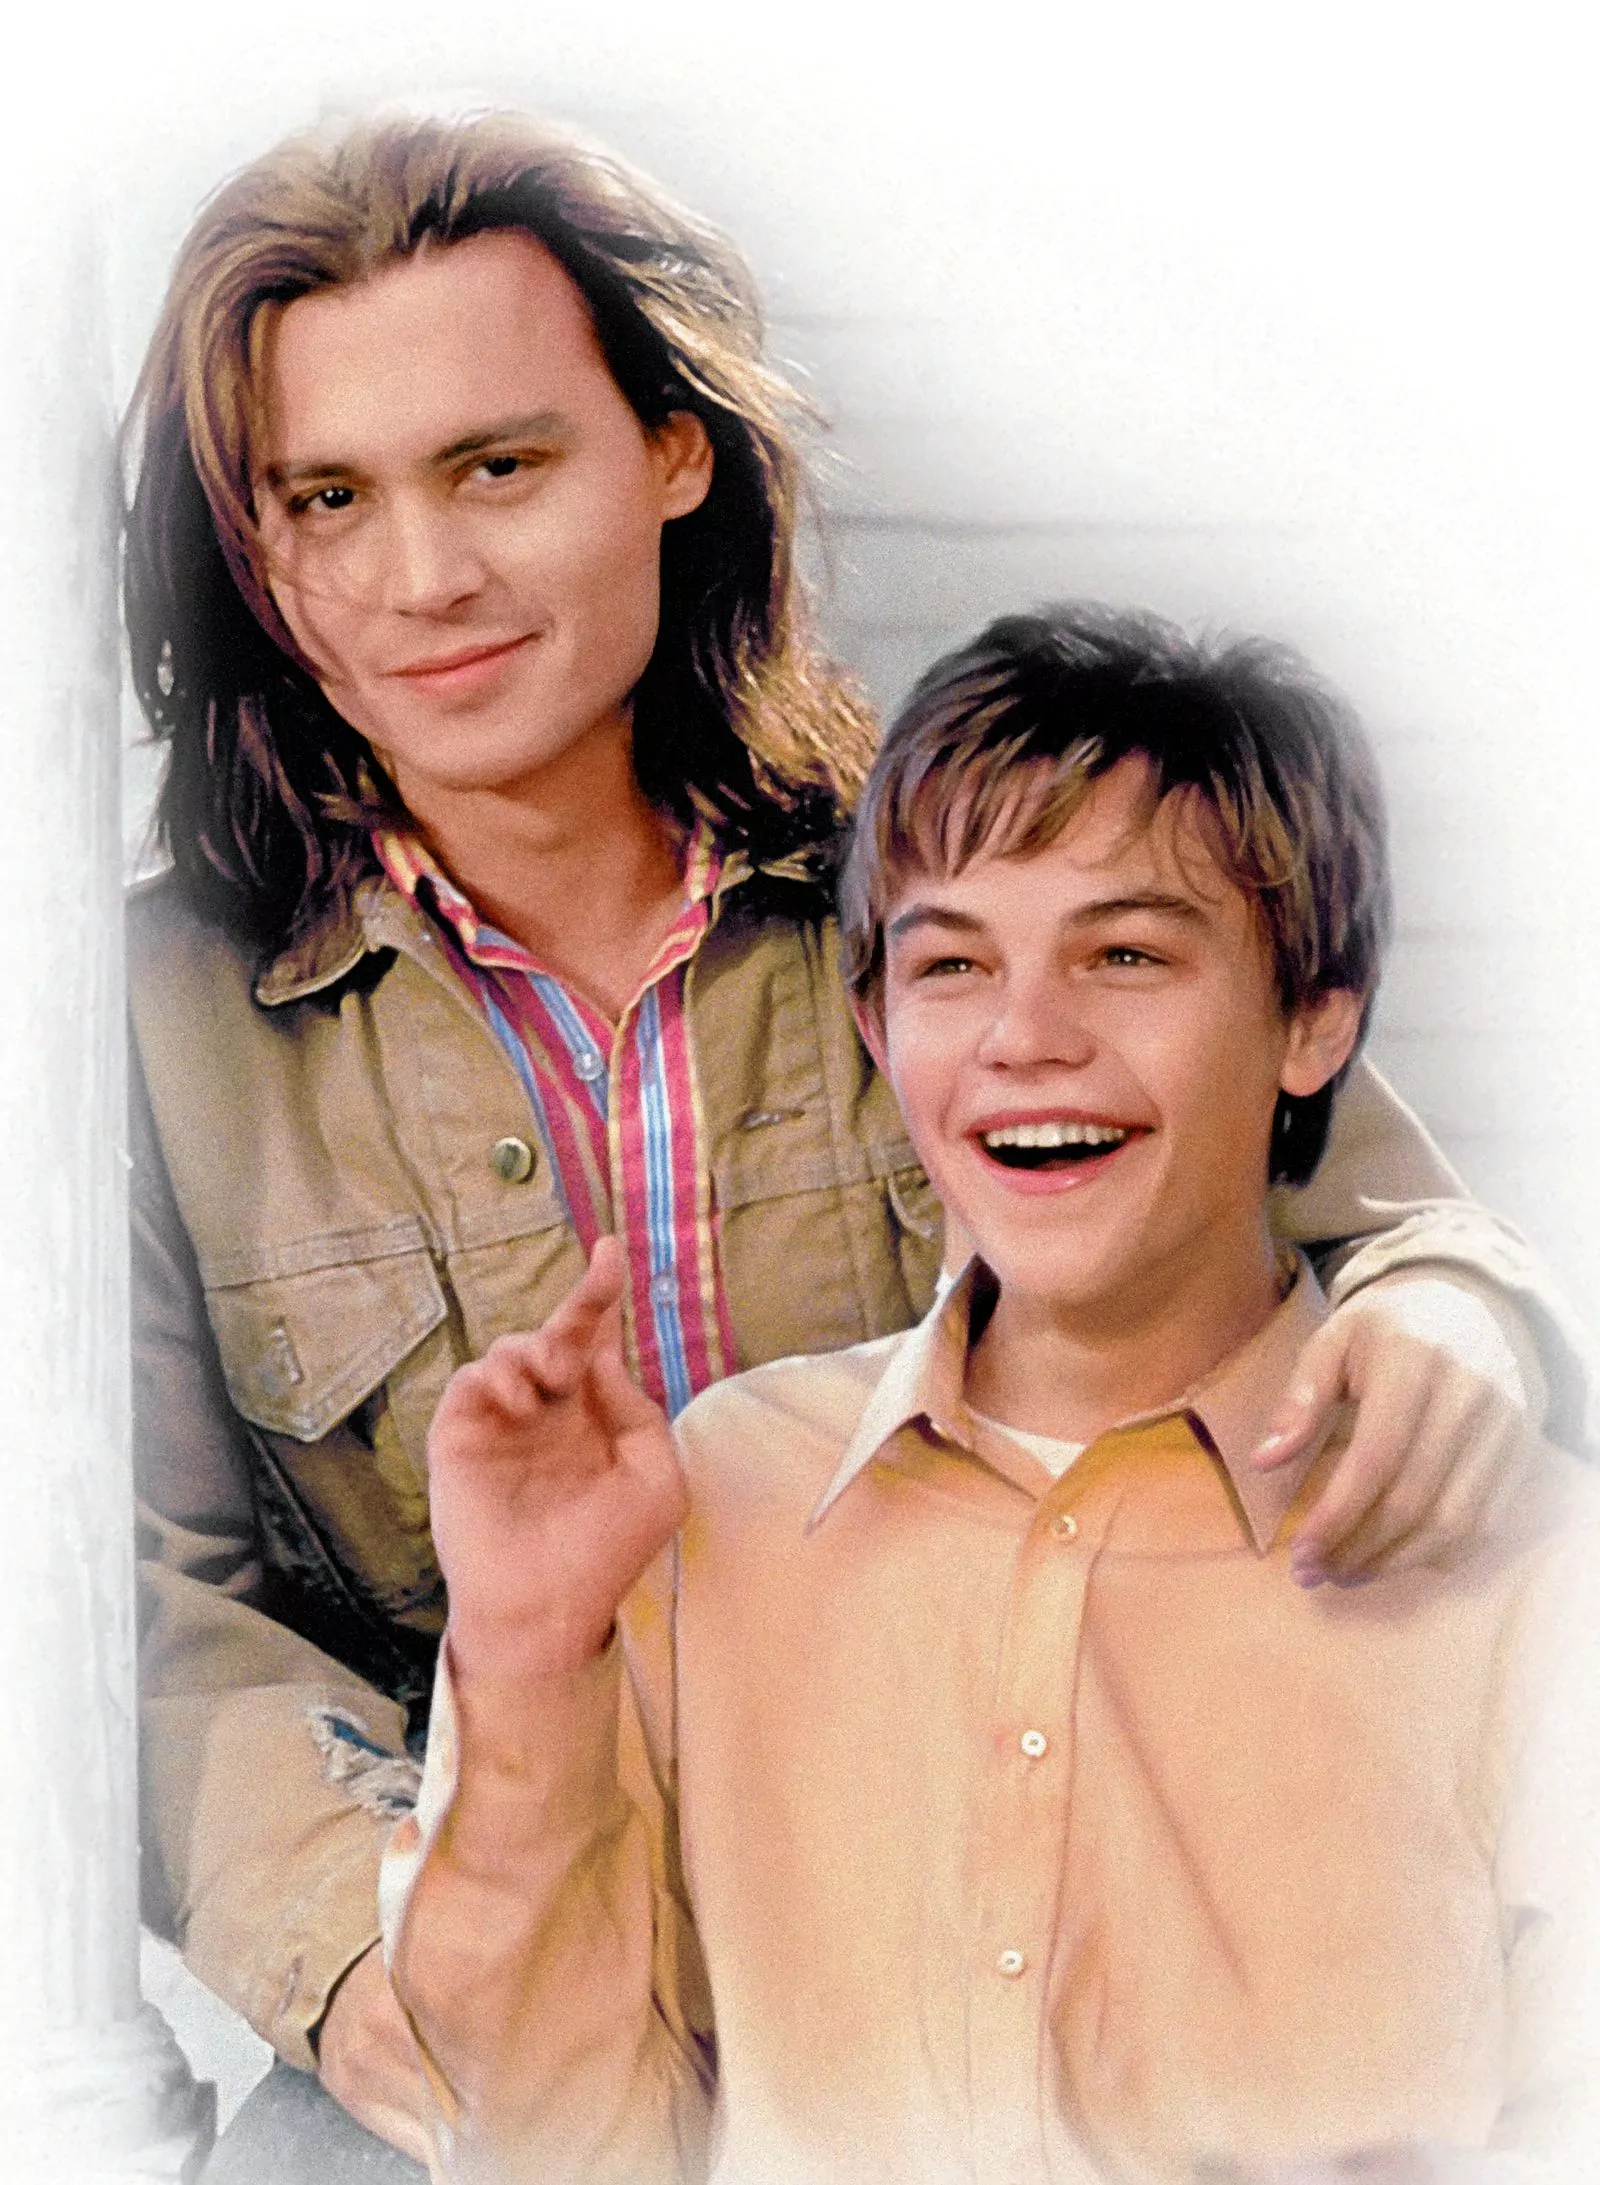 Johnny Depp and Leonardo DiCaprio in What's Eating Gilbert Grape, 1993